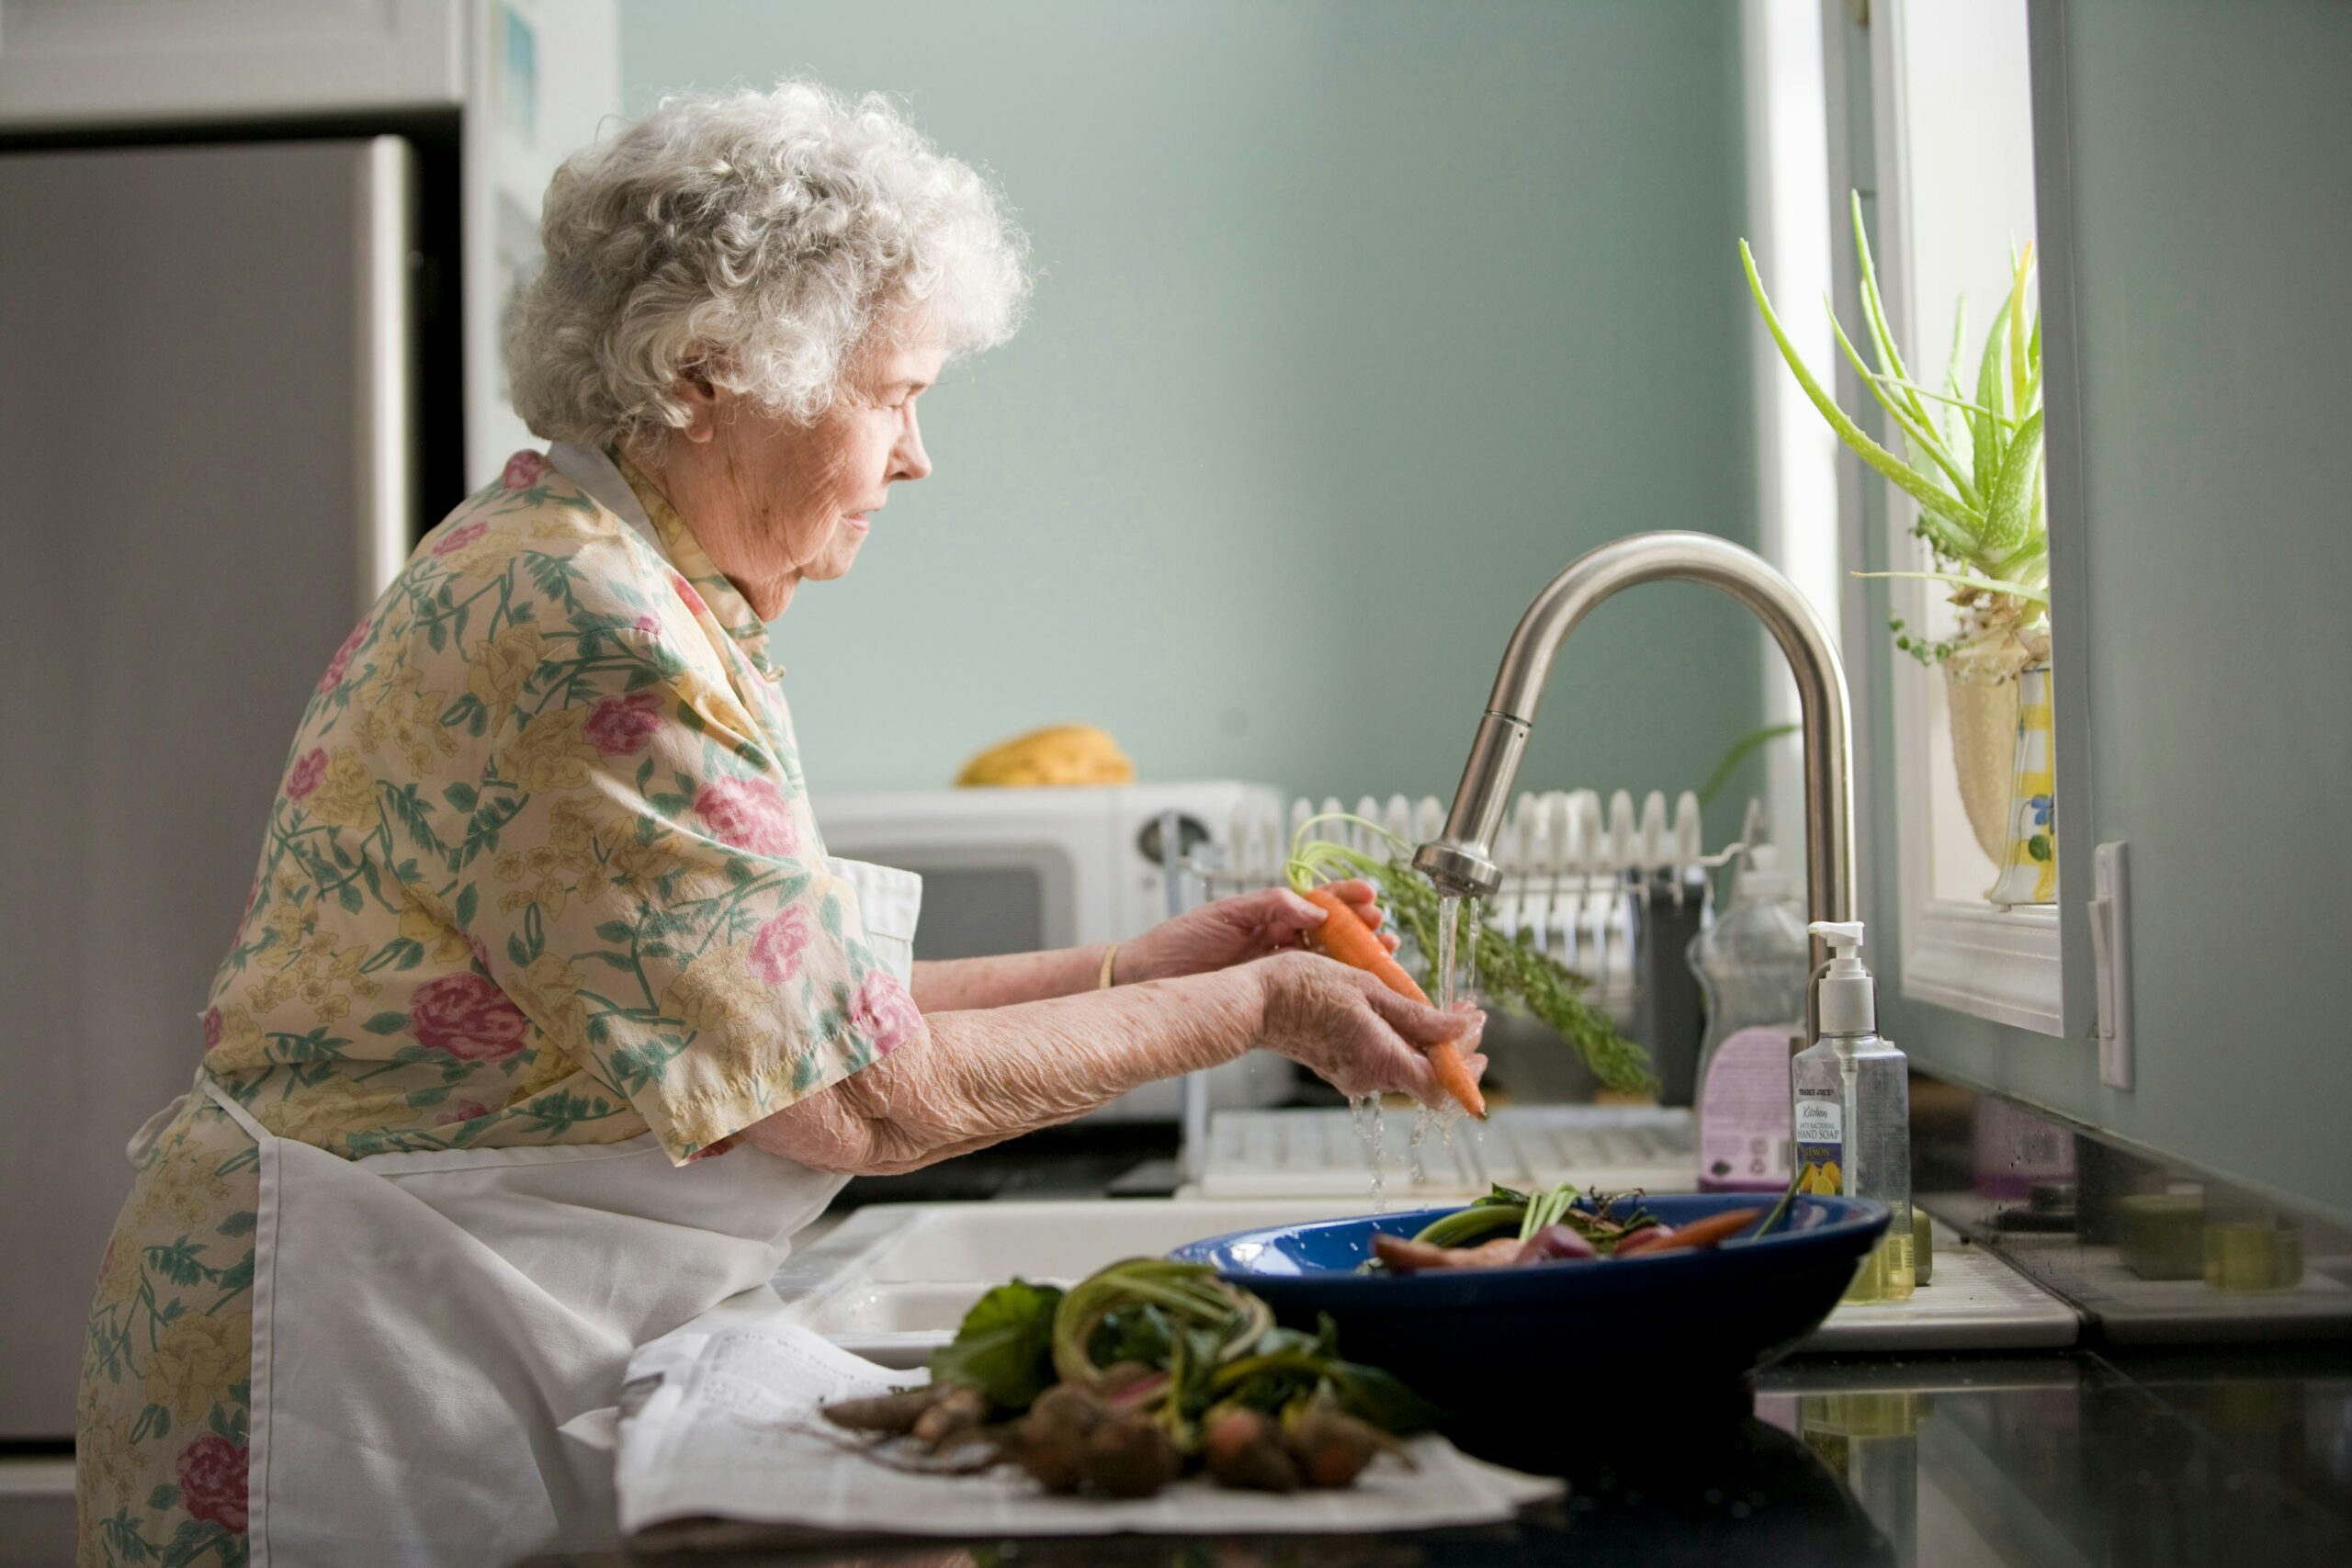 Woman washing vegetables at her kitchen sink.